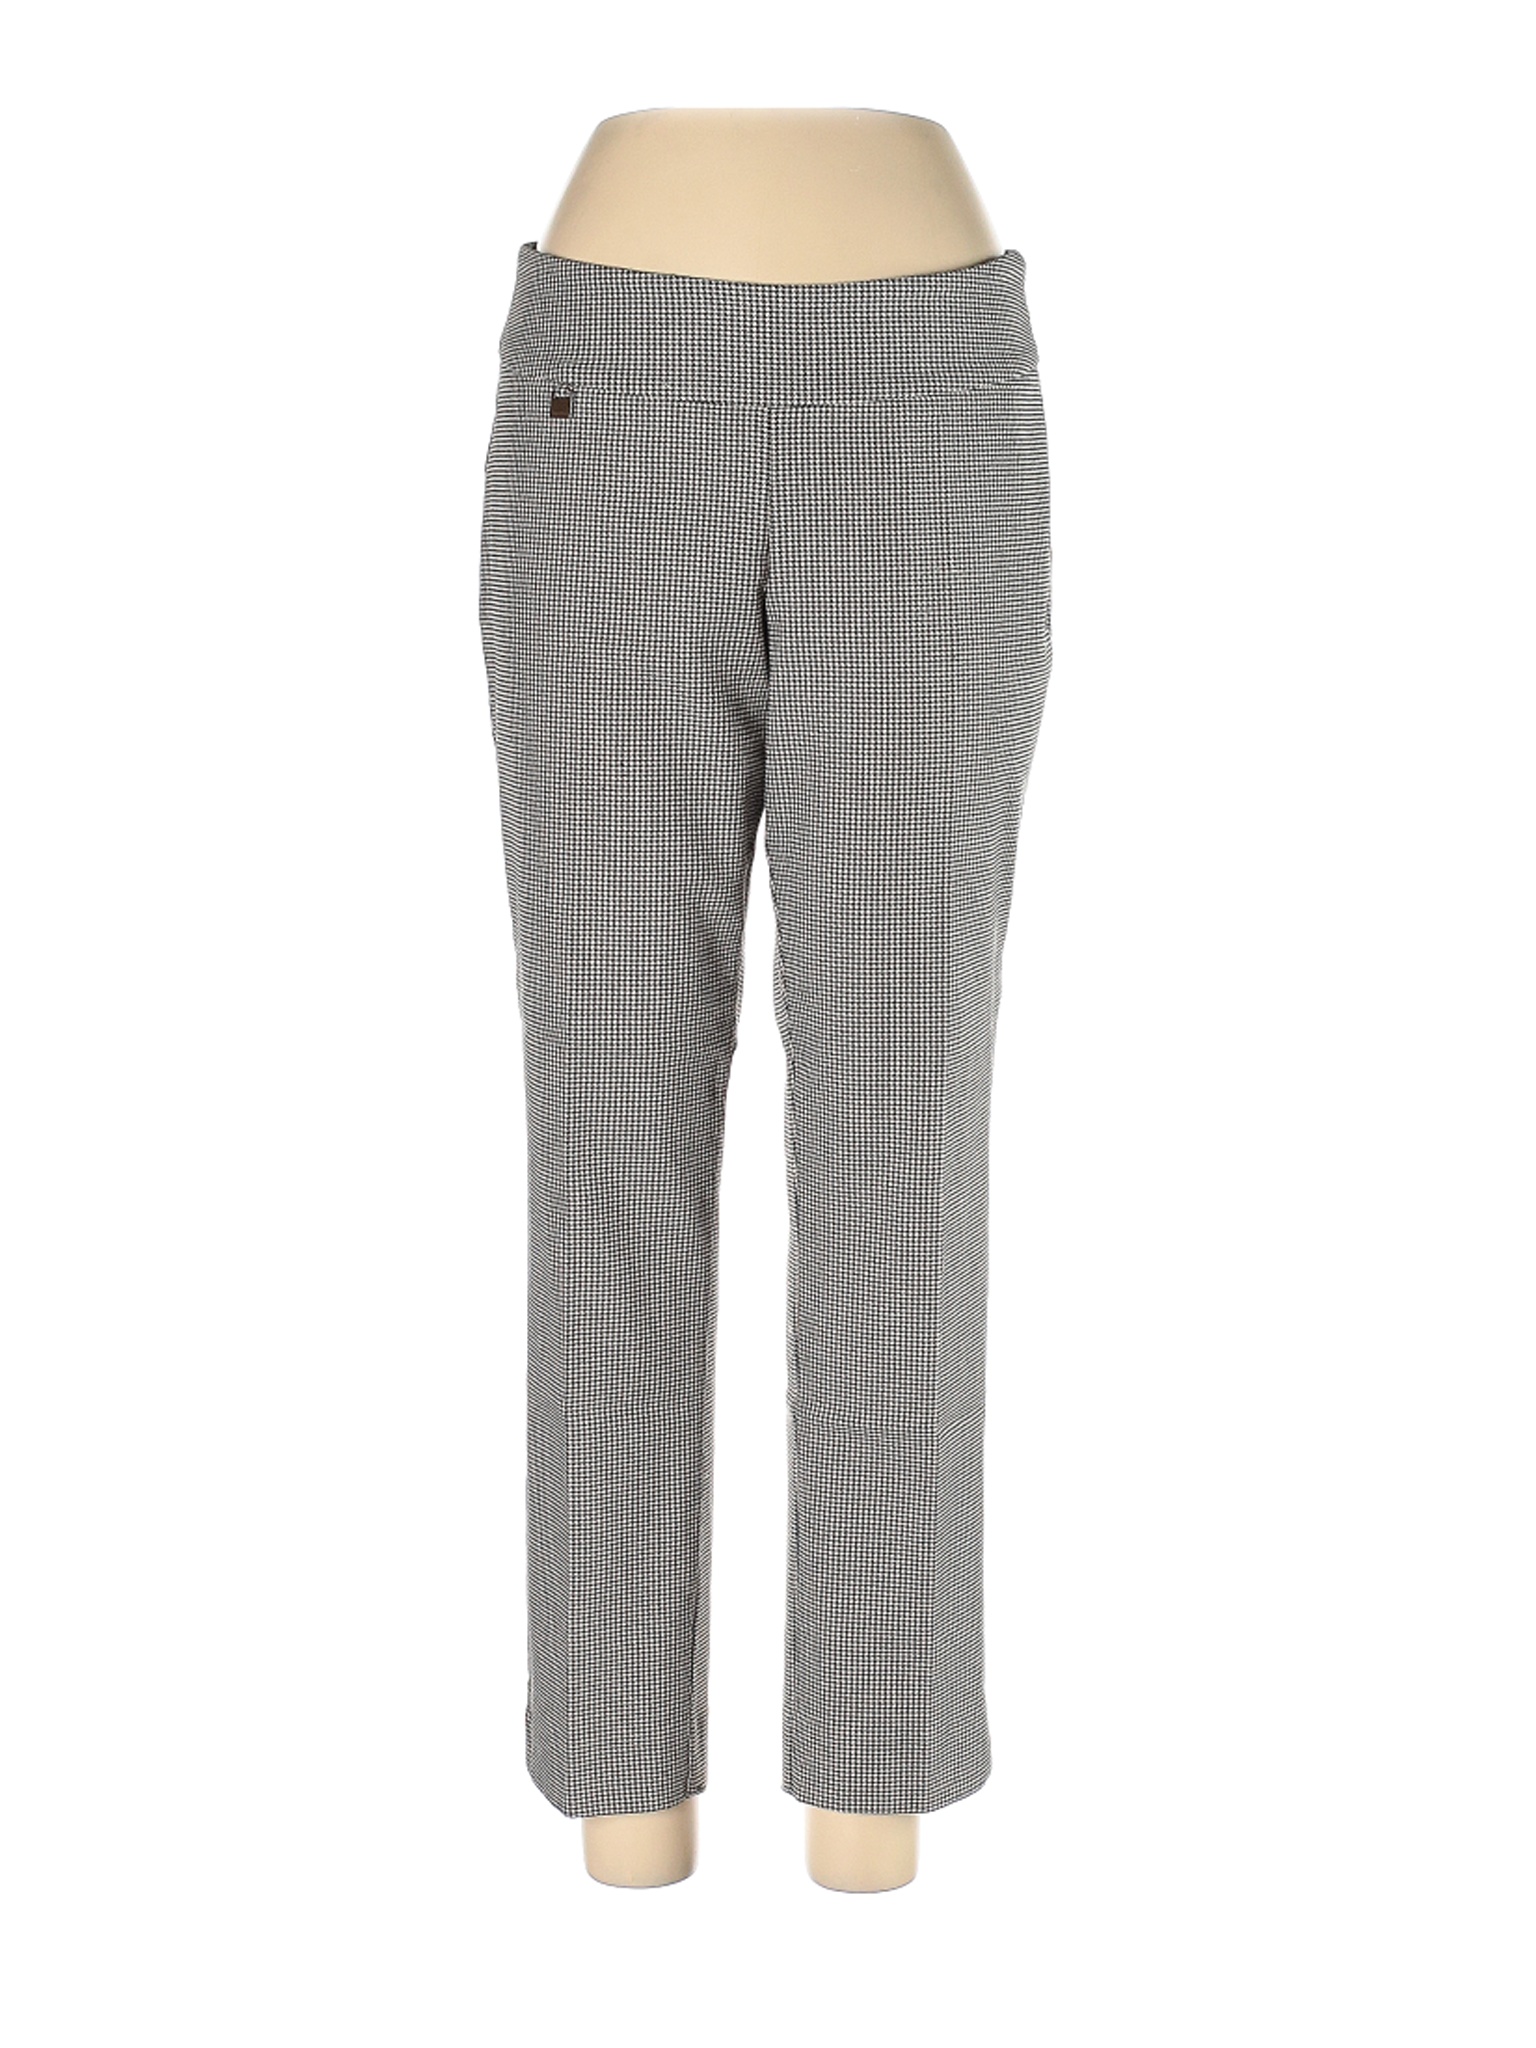 Peck & Peck Women Gray Casual Pants 10 Petites | eBay